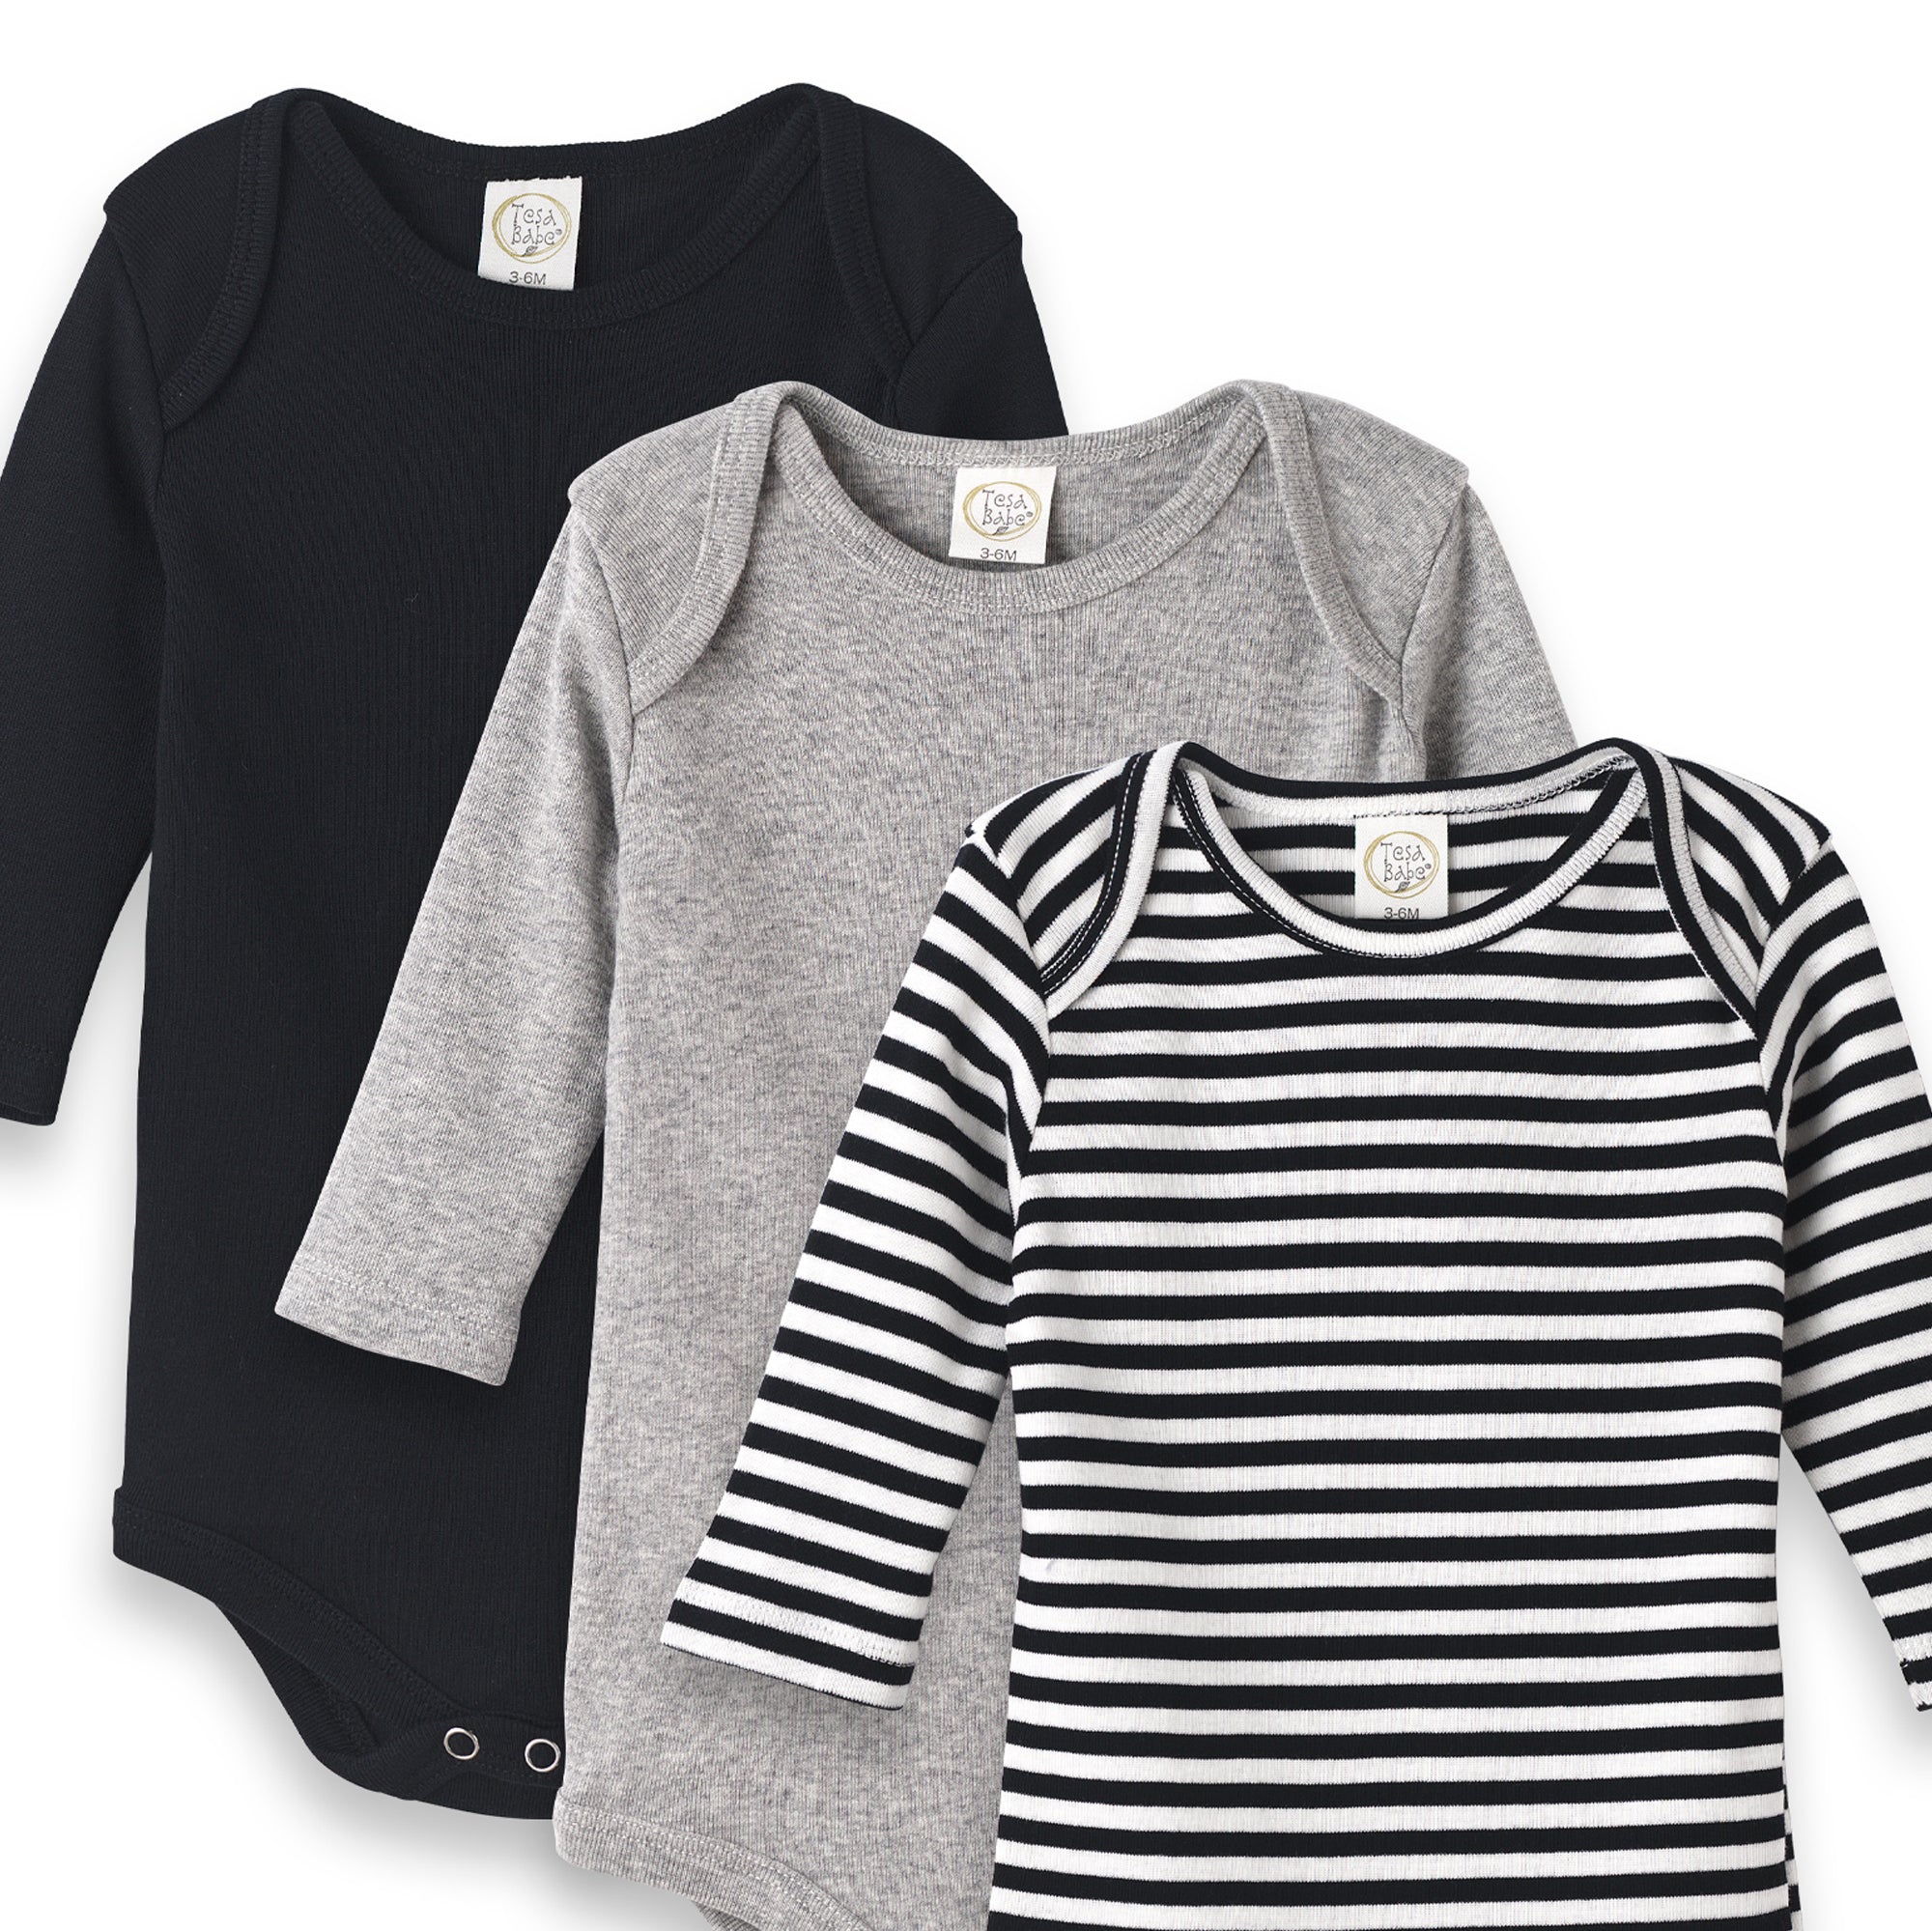 Set Of 3 Black Stripe & Grey Bodysuits